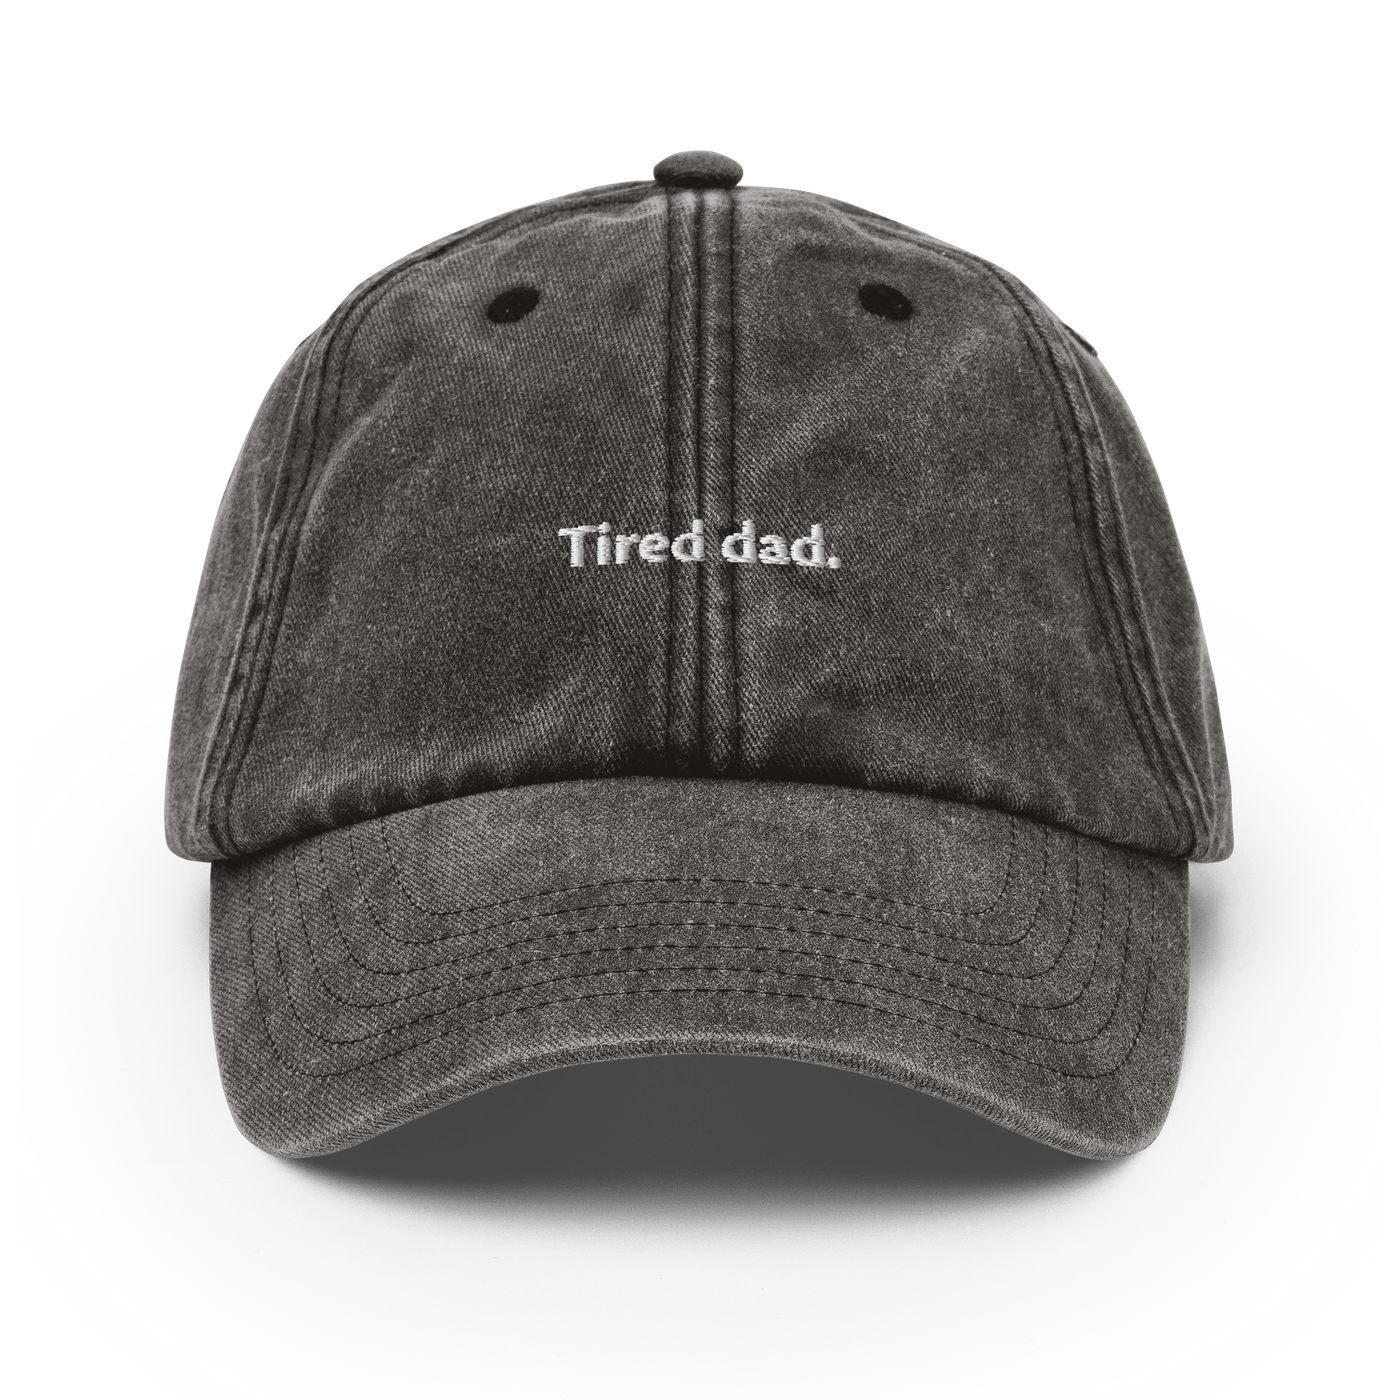 Tired dad Vintage Hat - Vintage Black - - Just Another Cap Store